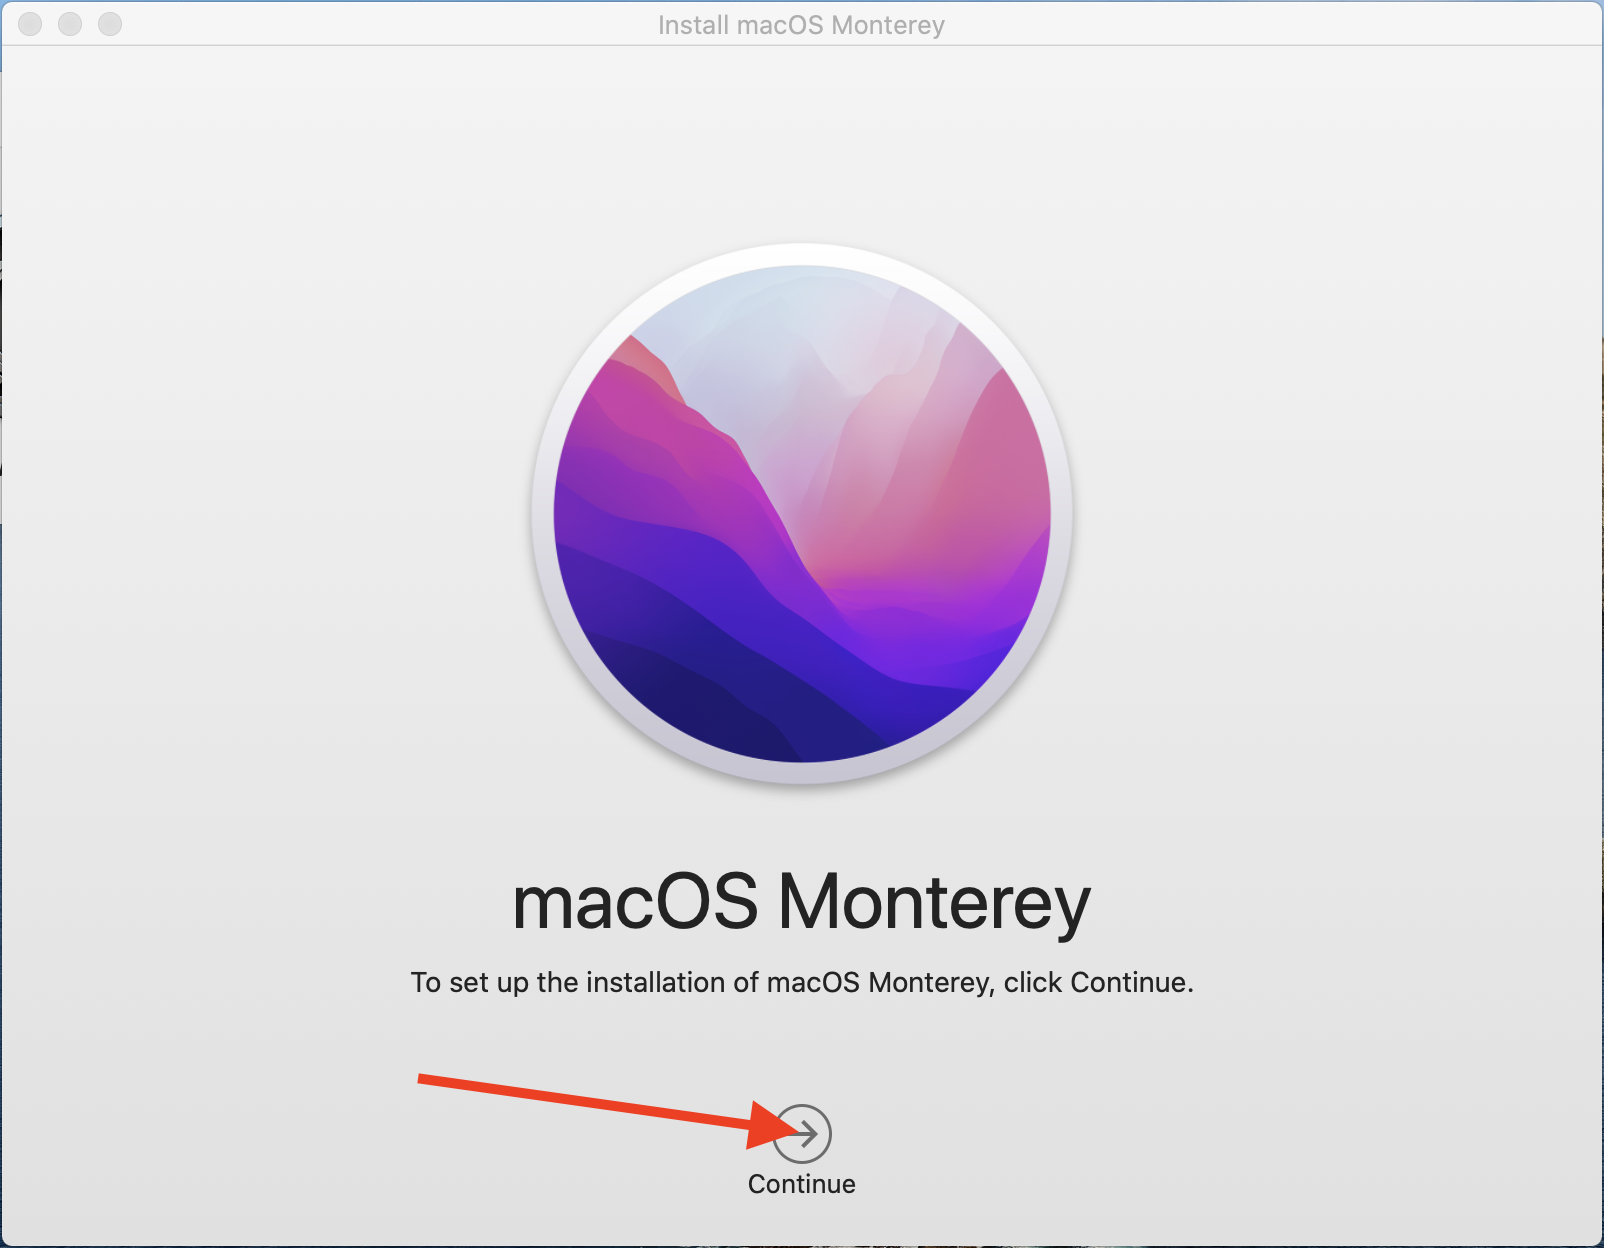 macOS Monterey upgrade window arrow highlighting continue.